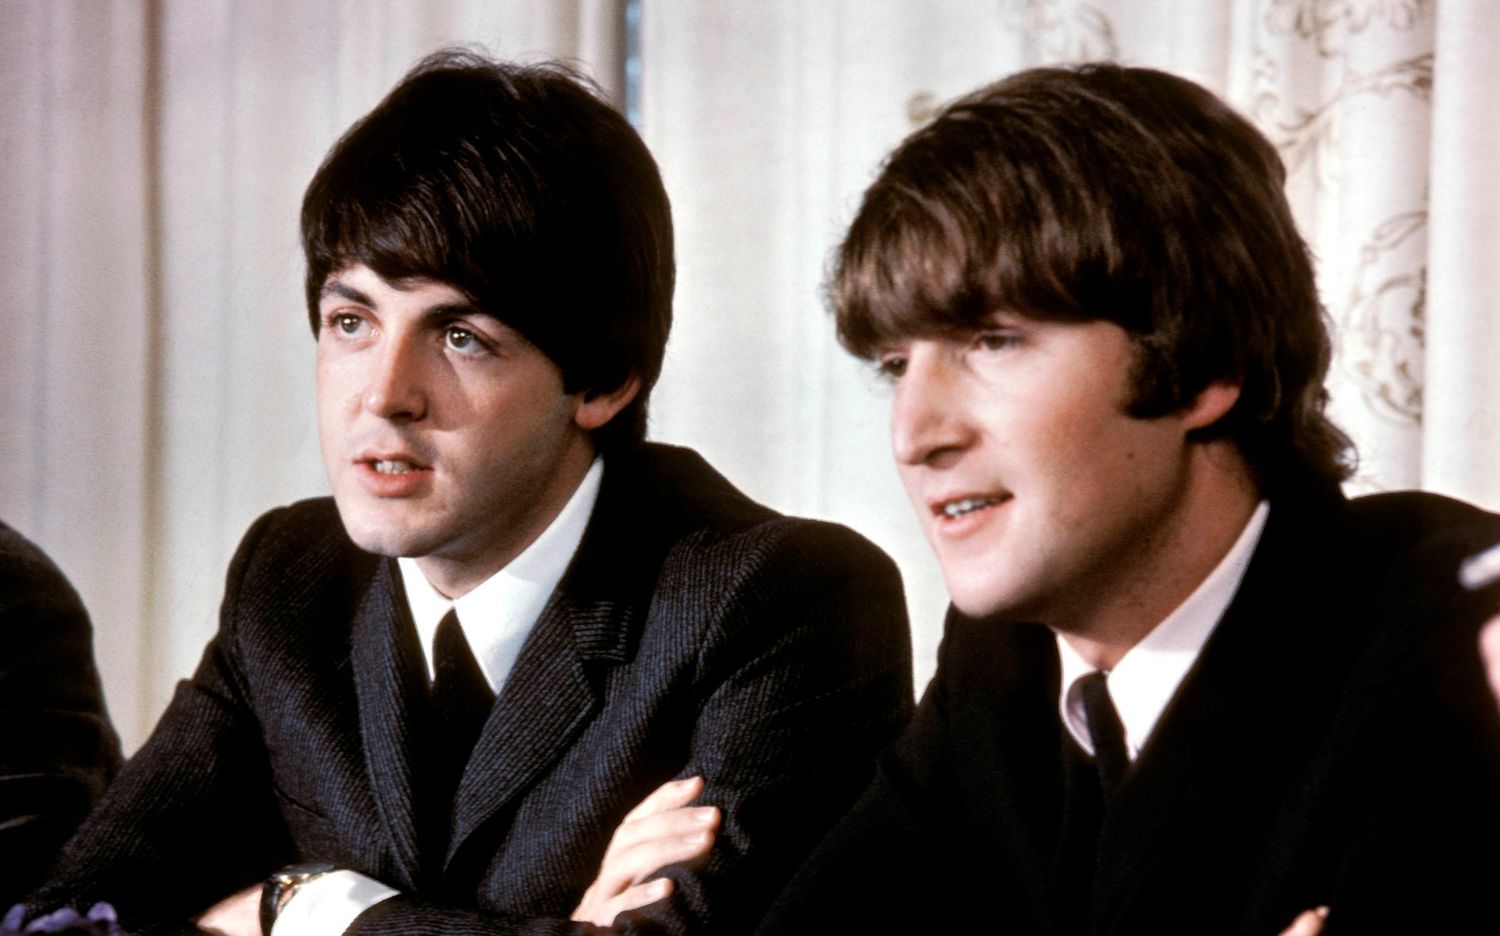 Who Was The Better Songwriter: Lennon Or McCartney